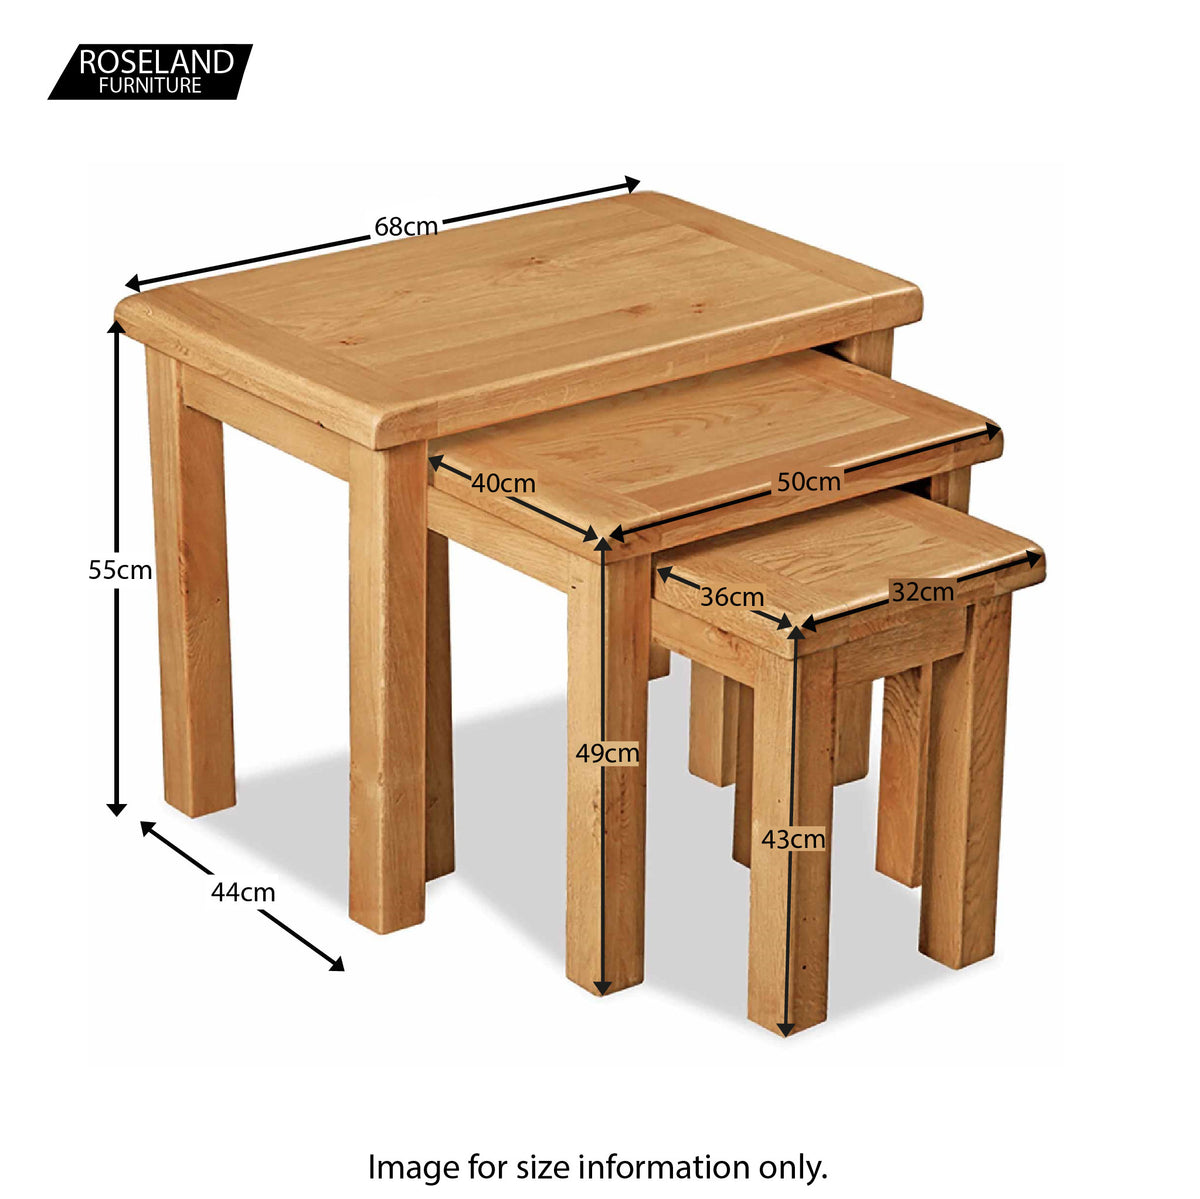 Zelah Oak Nest of Tables - Size Guide